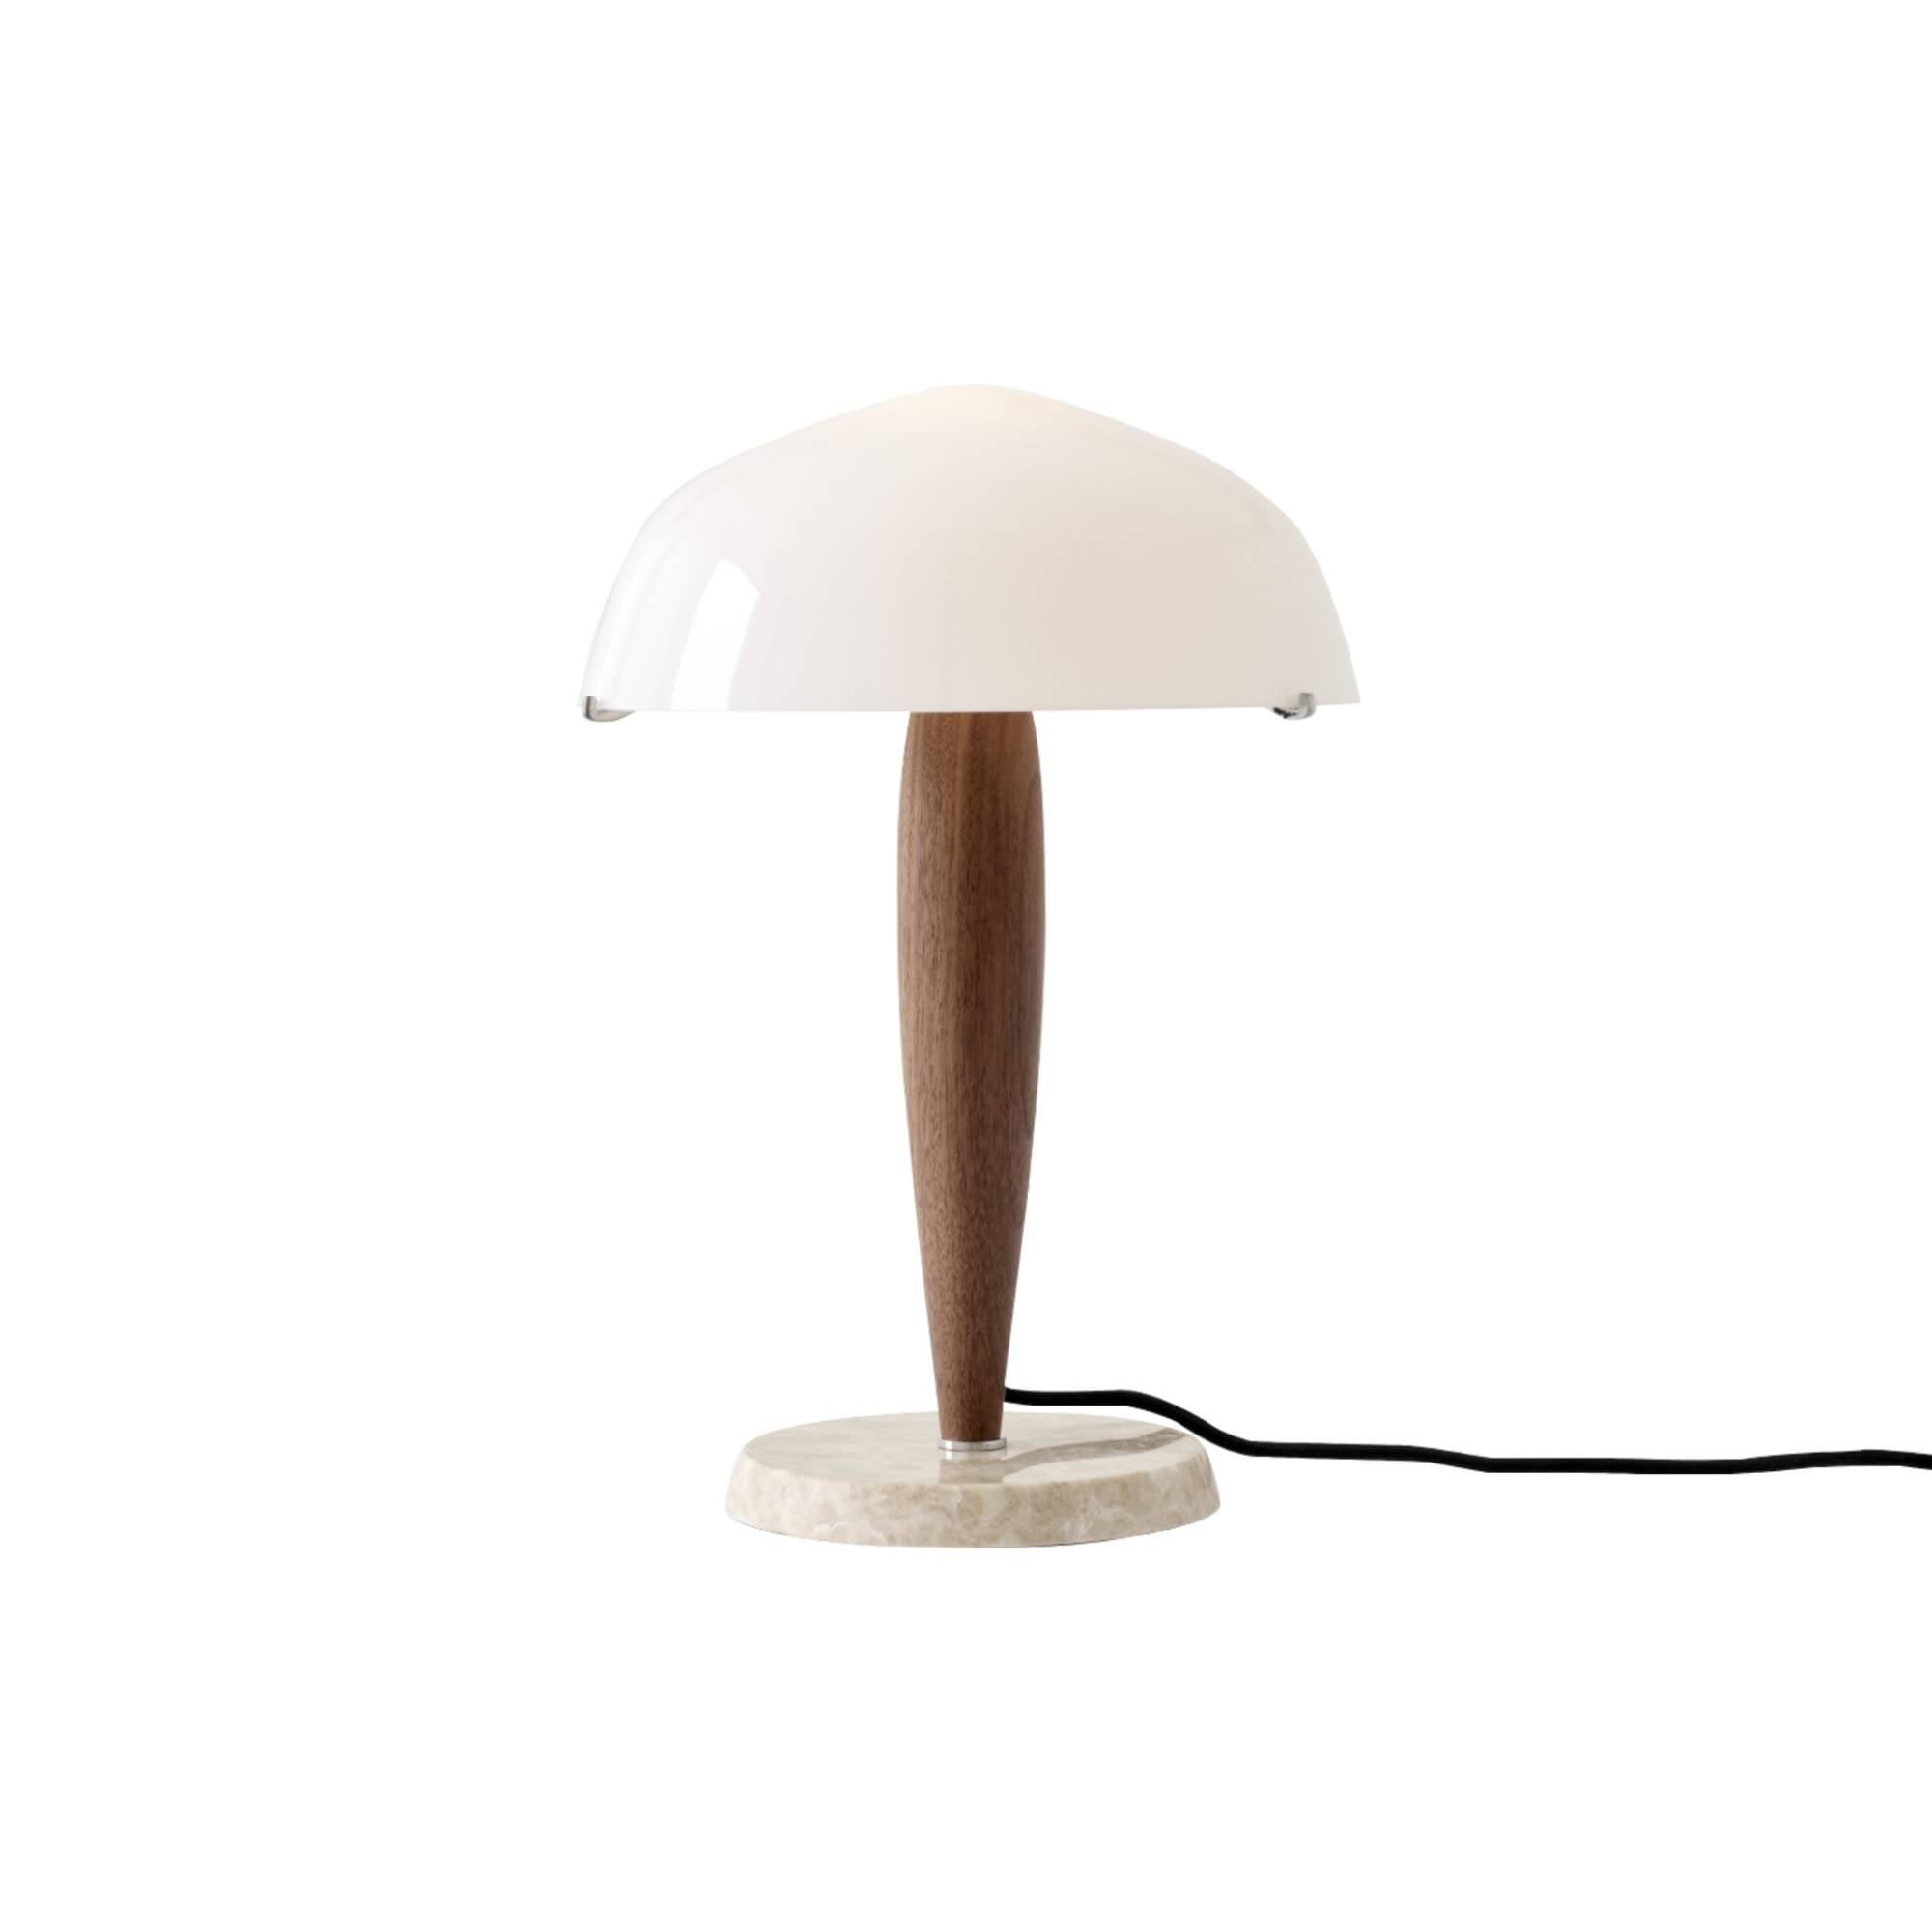 Herman SHY3 Table Lamp